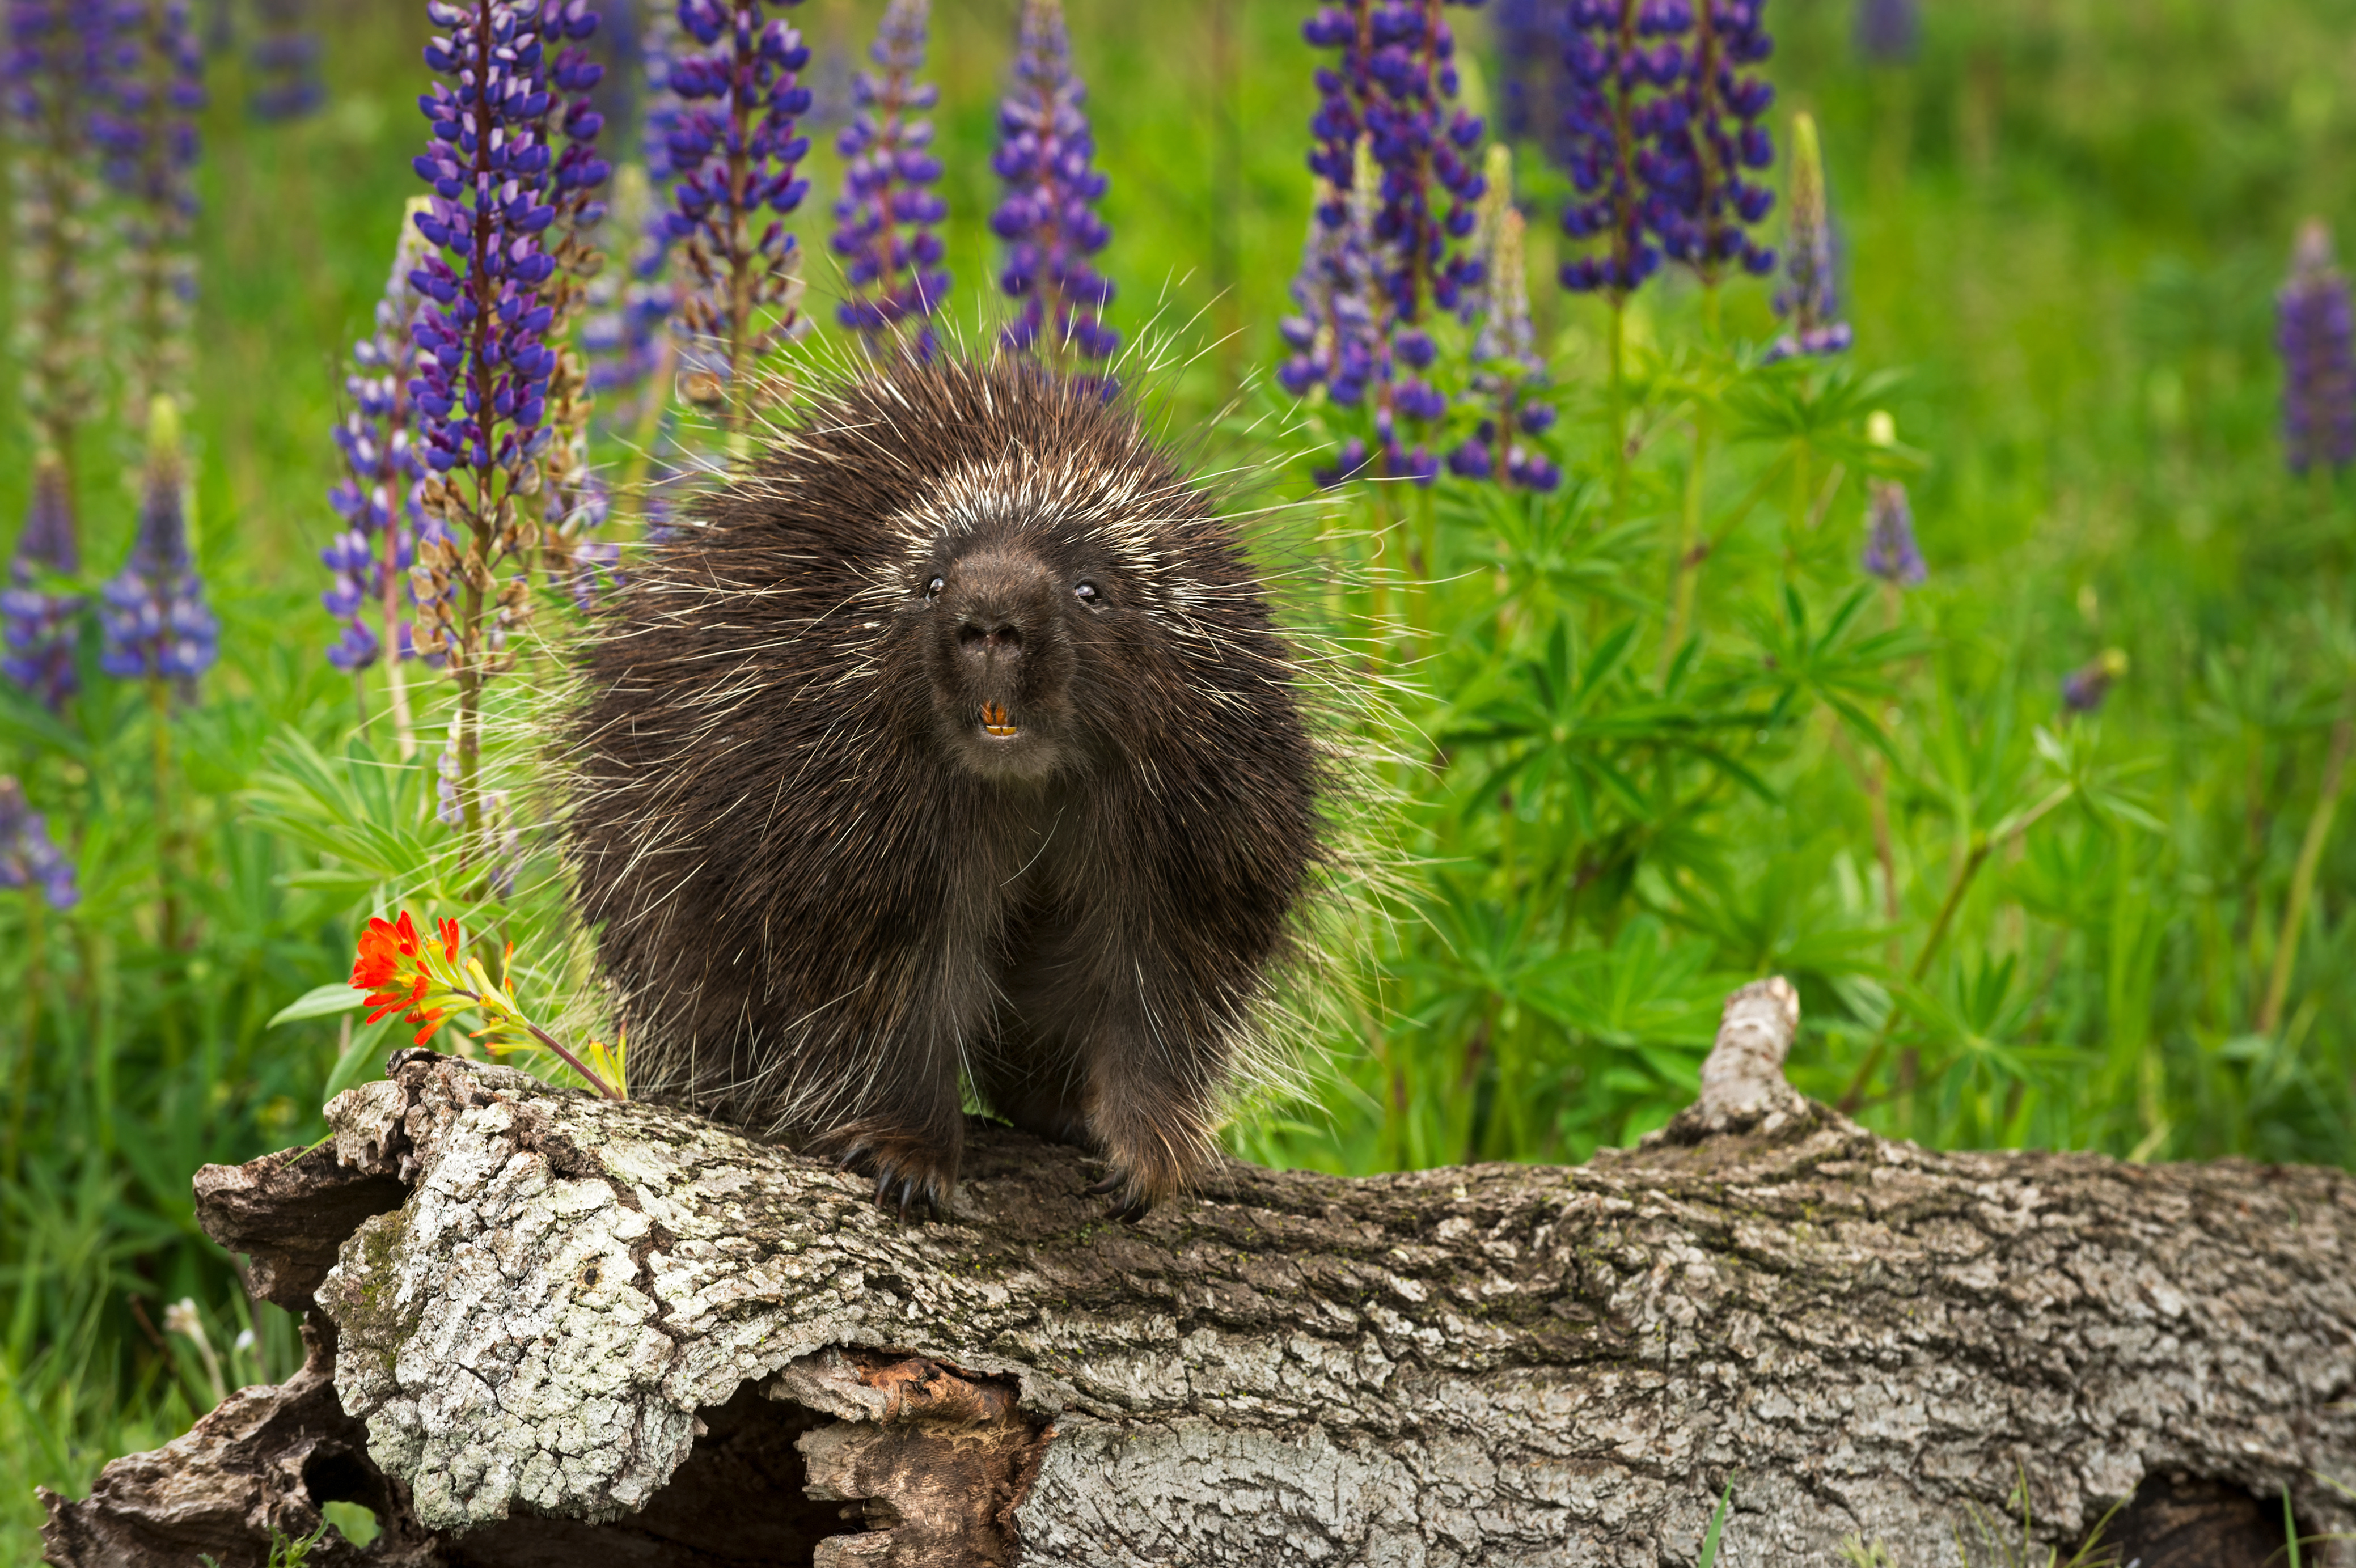 A North American porcupine sitting on a log.